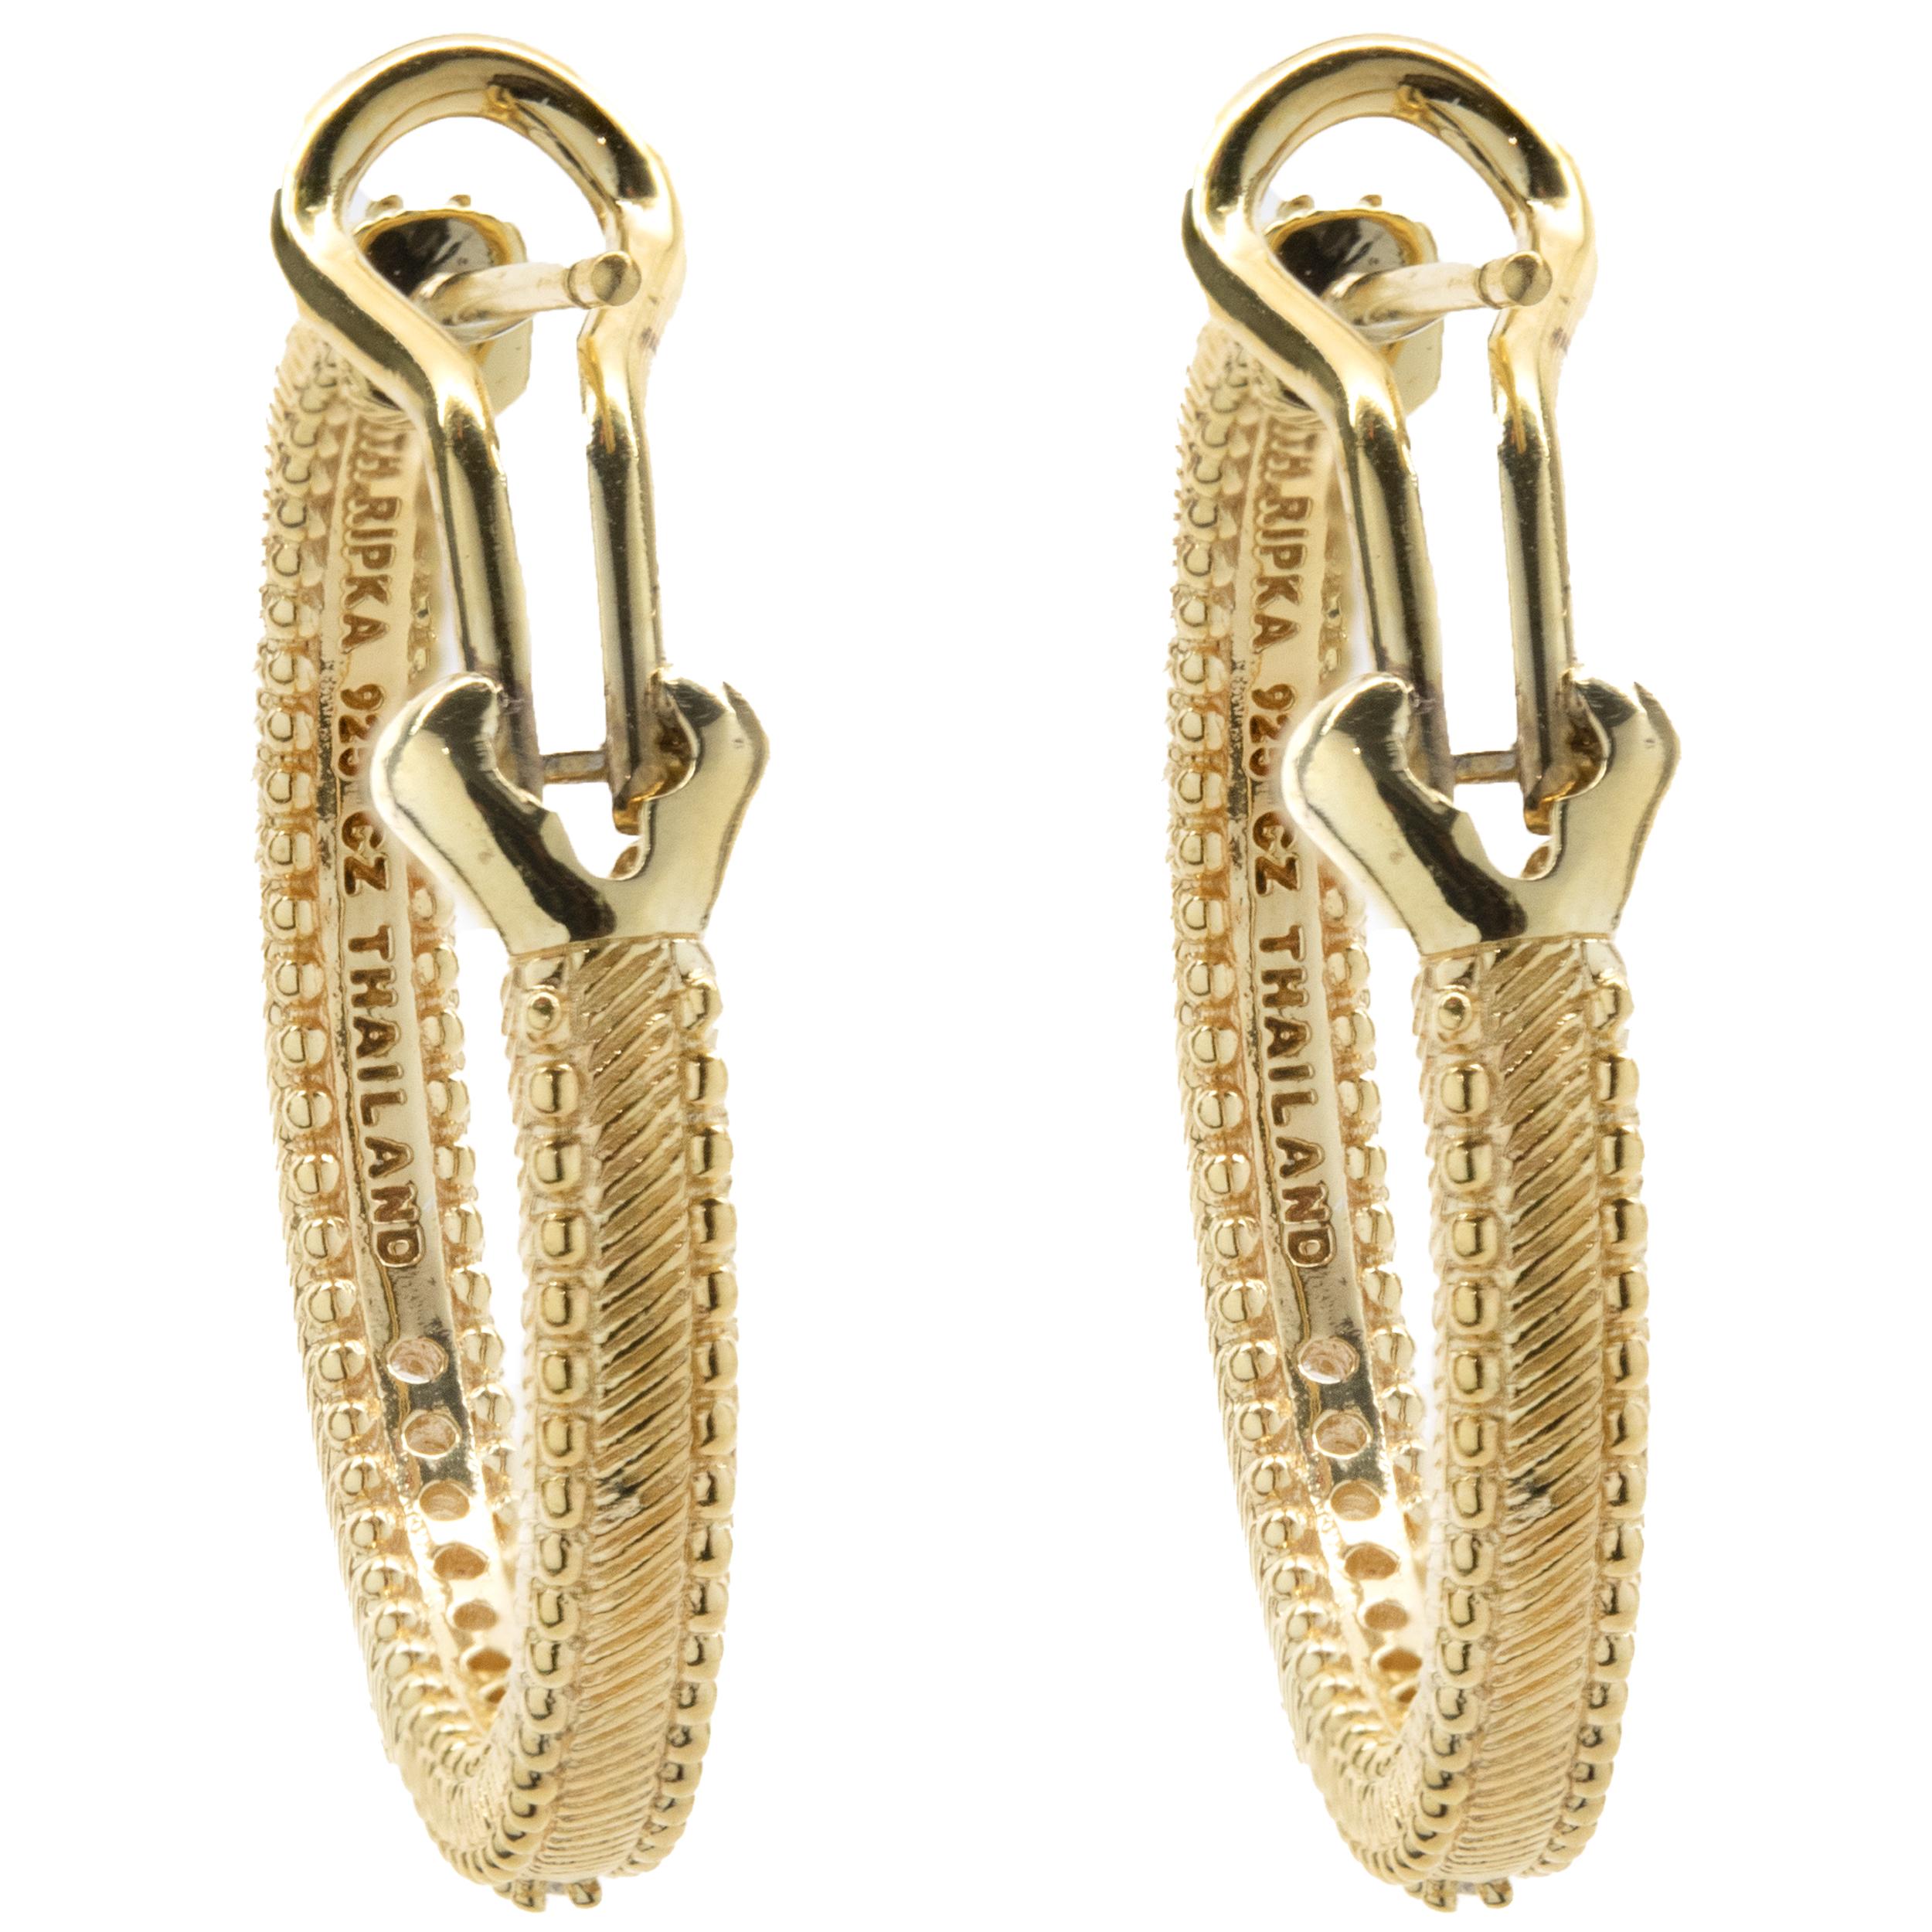 Designer: Judith Ripka
Material: Sterling Silver
Dimensions: earrings measure 26mm in length
Weight: 8.02 grams
